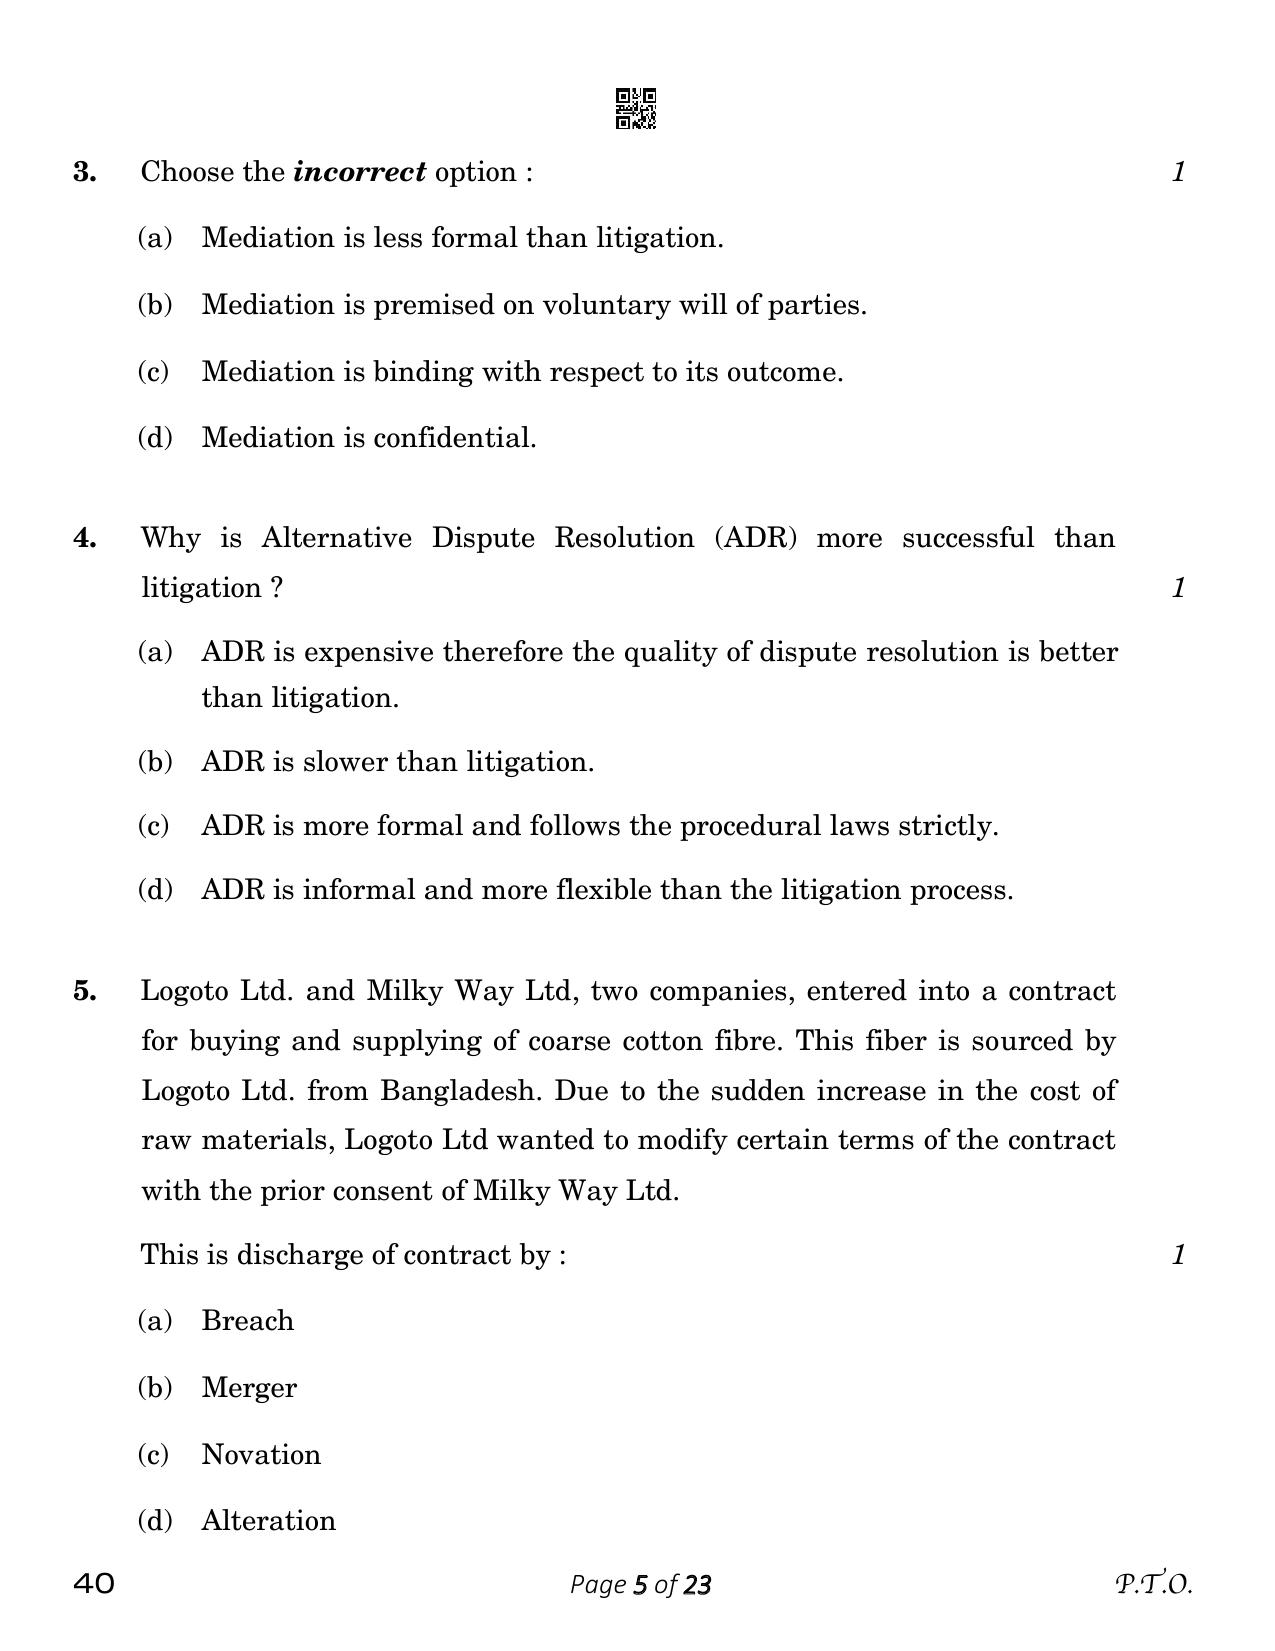 CBSE Class 12 Legal Studies (Compartment) 2023 Question Paper - Page 5